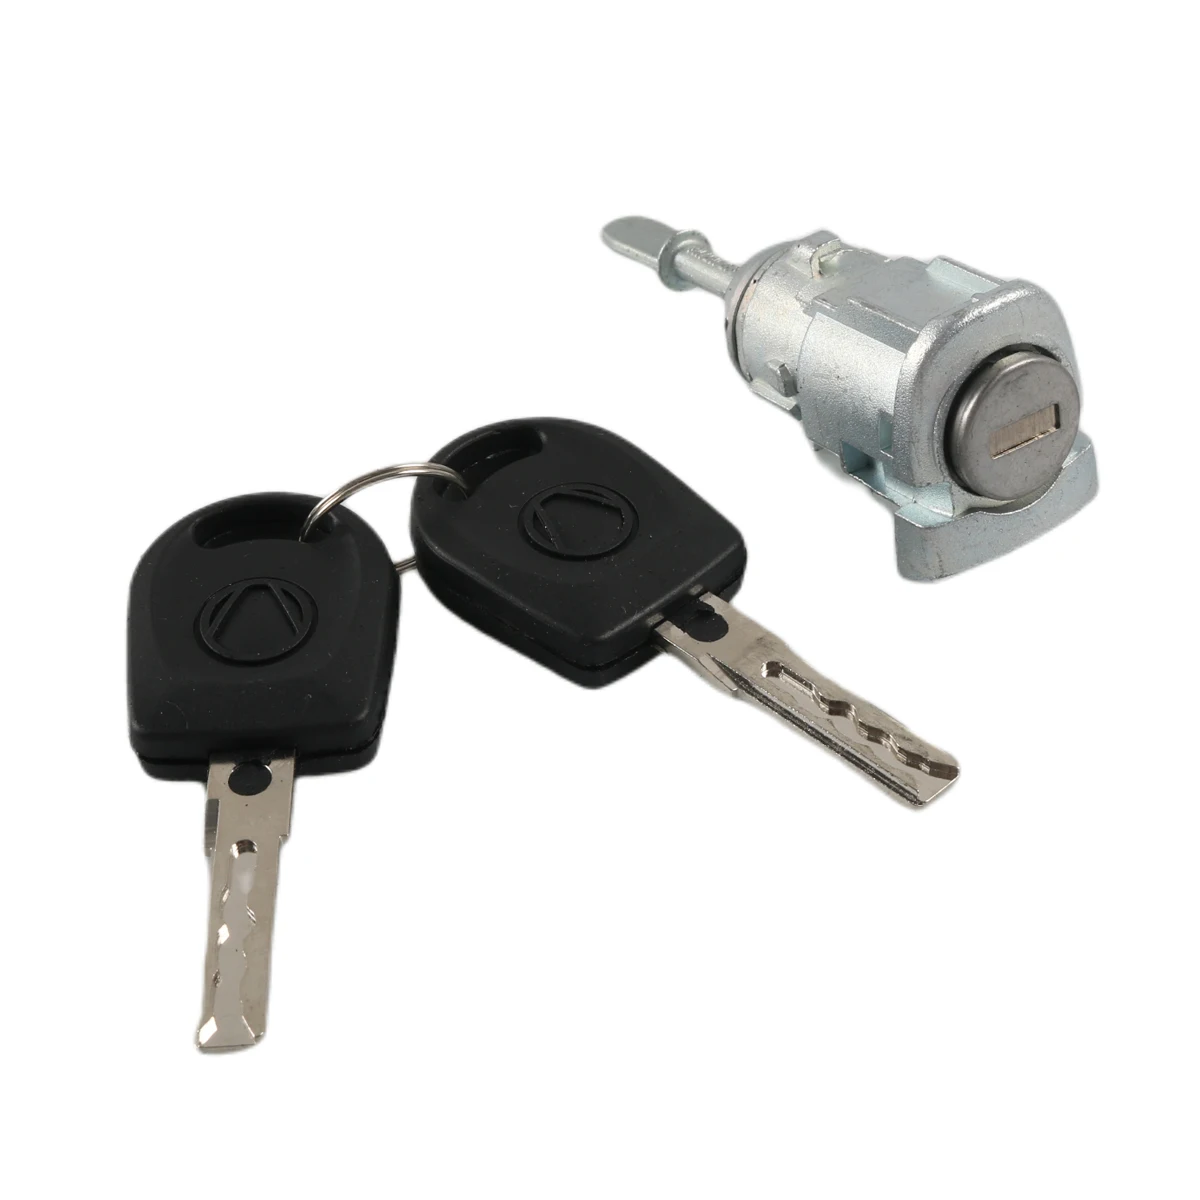 Kfz-Türschlösser - Car Lock Systems